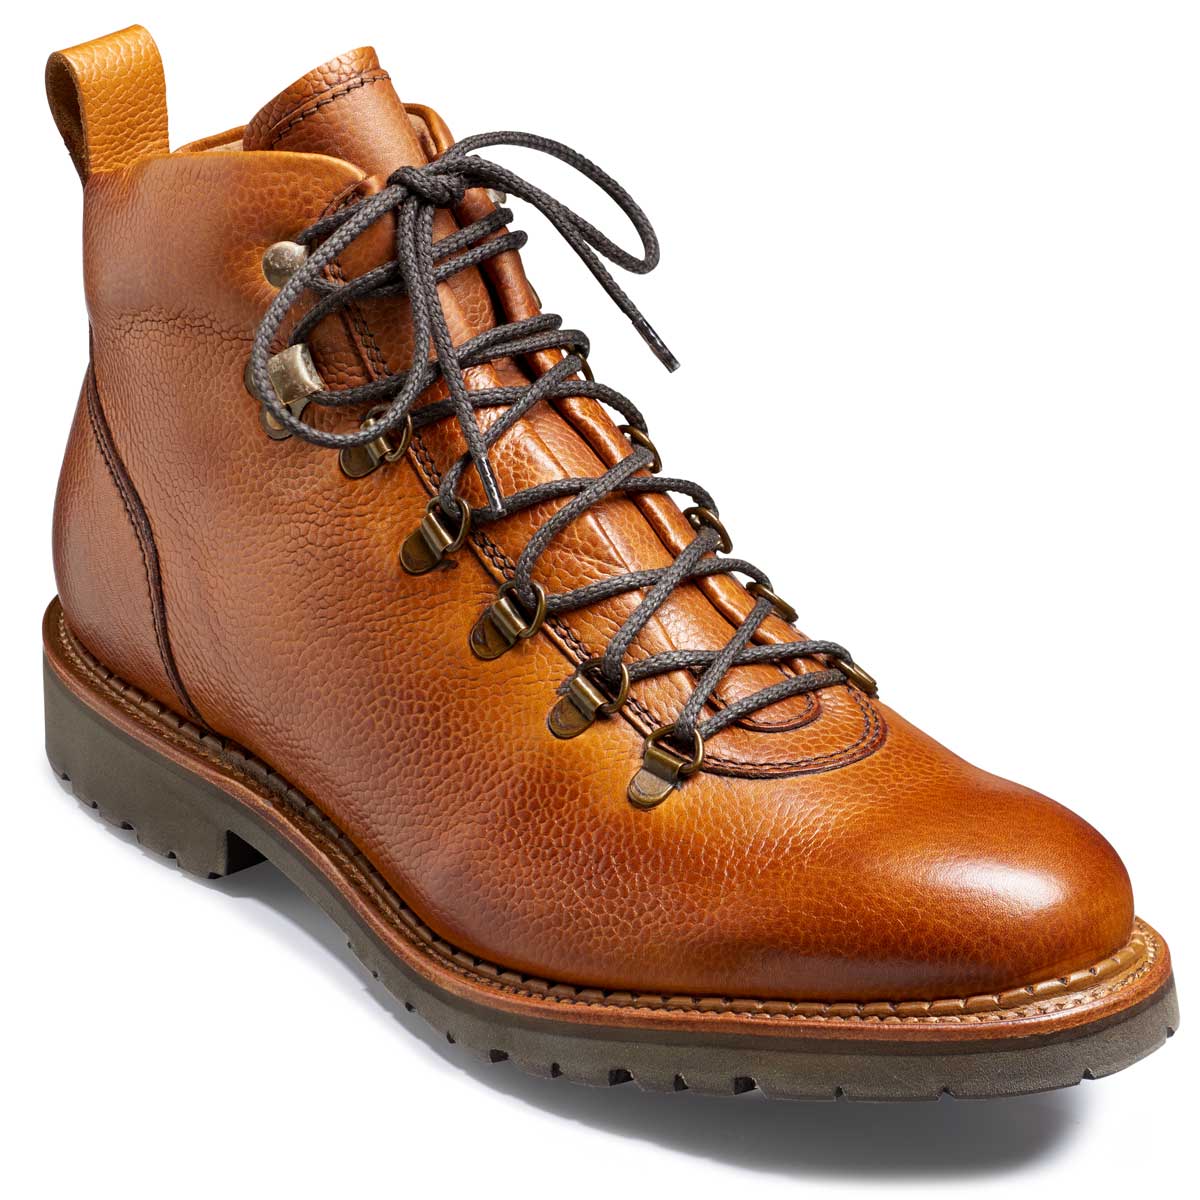 Barker Glencoe Men's Hiking Boots - Cedar Grain